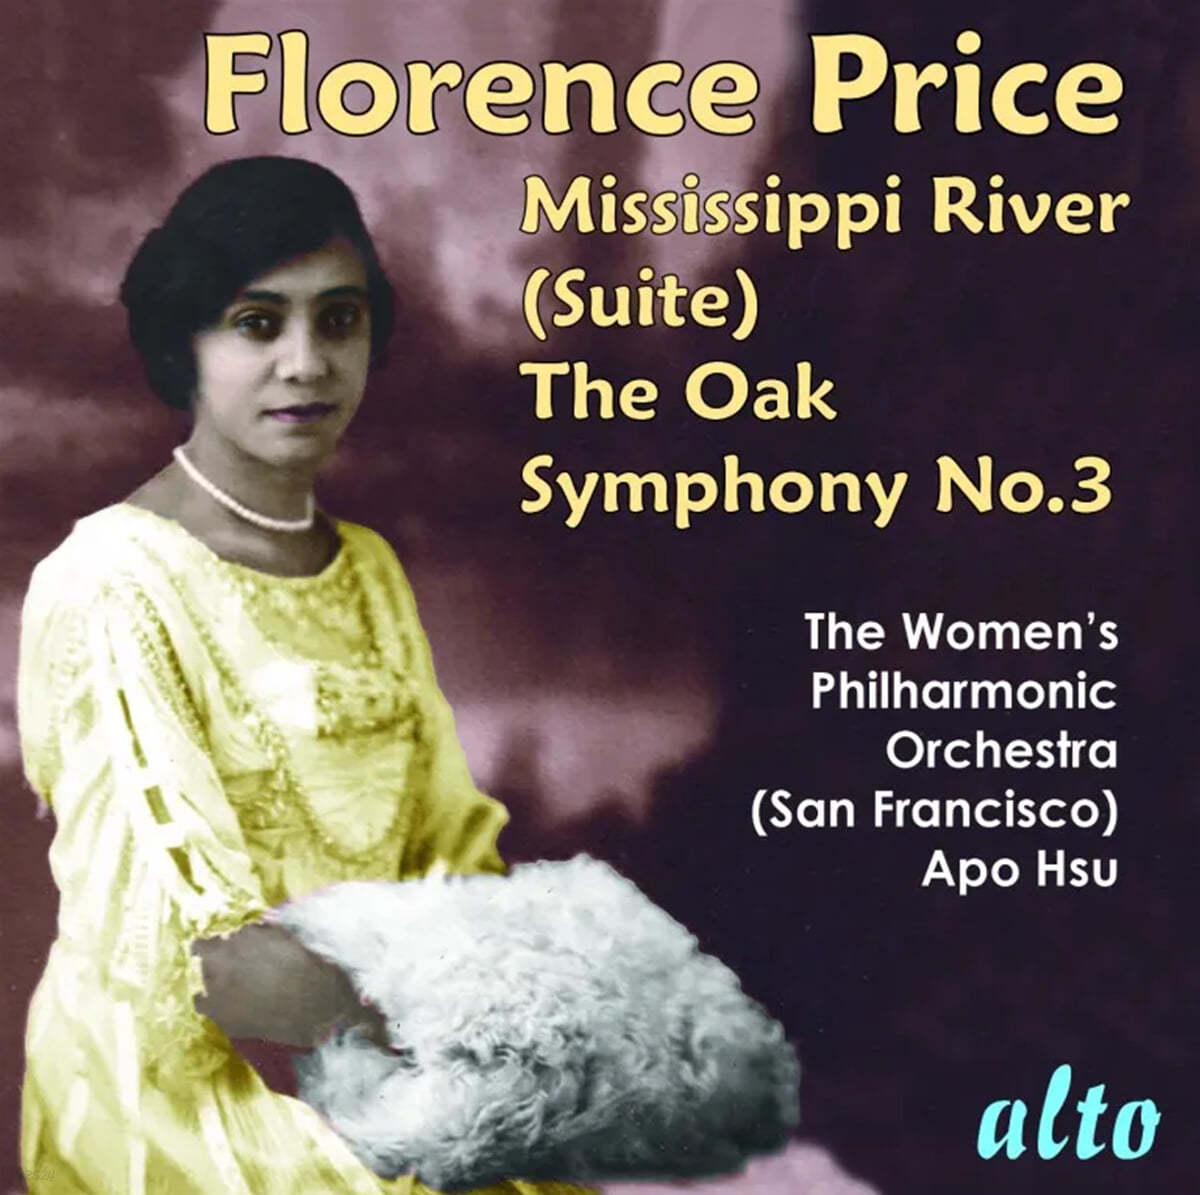 Arpo Hsu 플로렌스 프라이스: 교향곡 3번, 미시시피 강 모음곡 (Florence Price: Symphony No. 3, Mississippi River Suite)